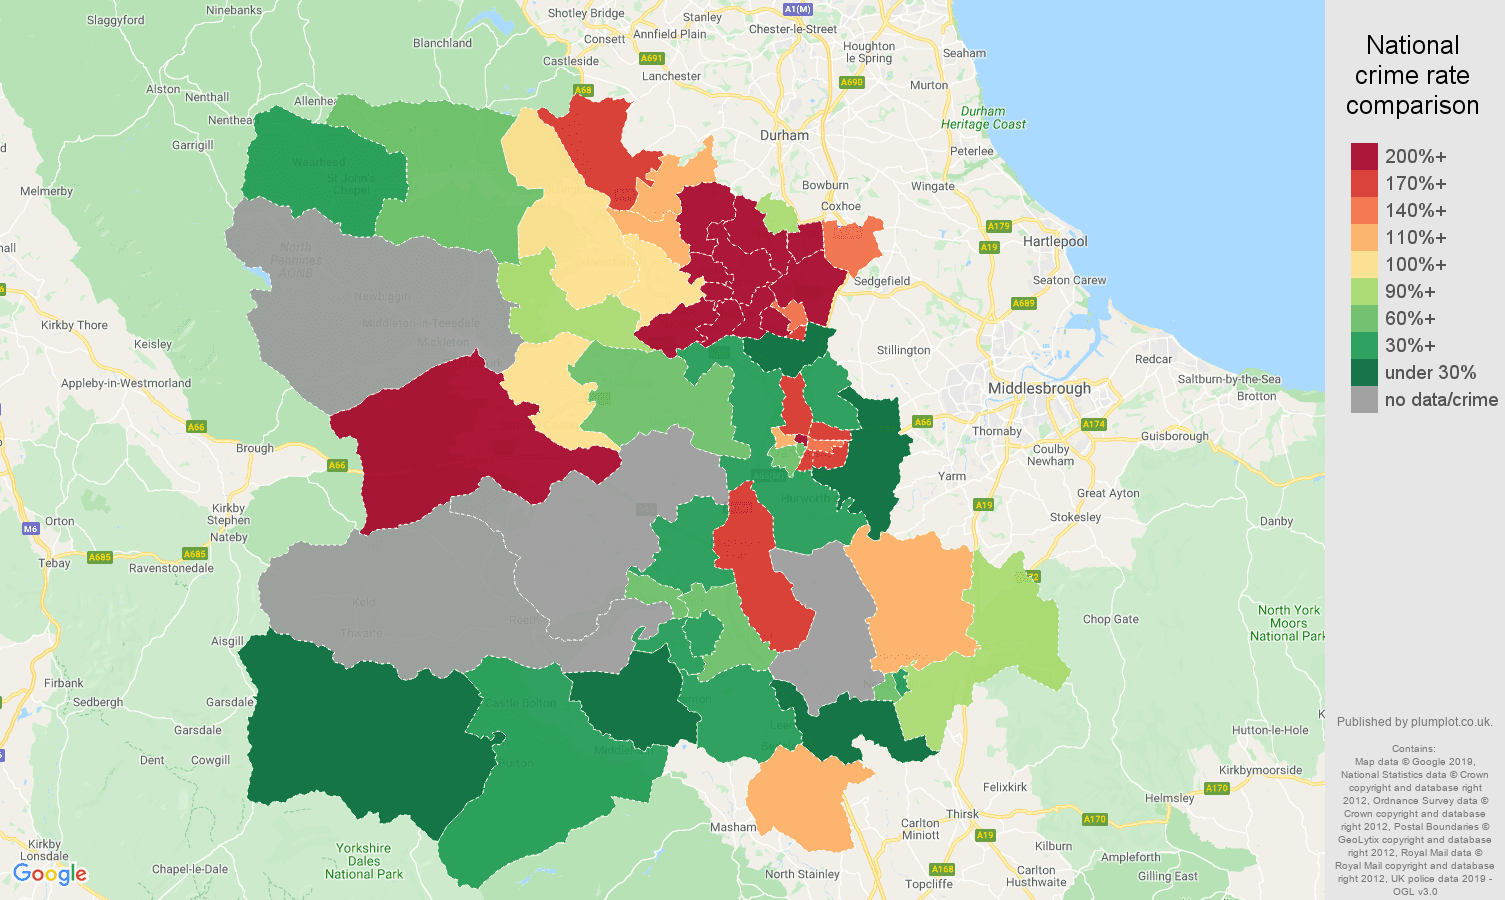 Darlington other crime rate comparison map